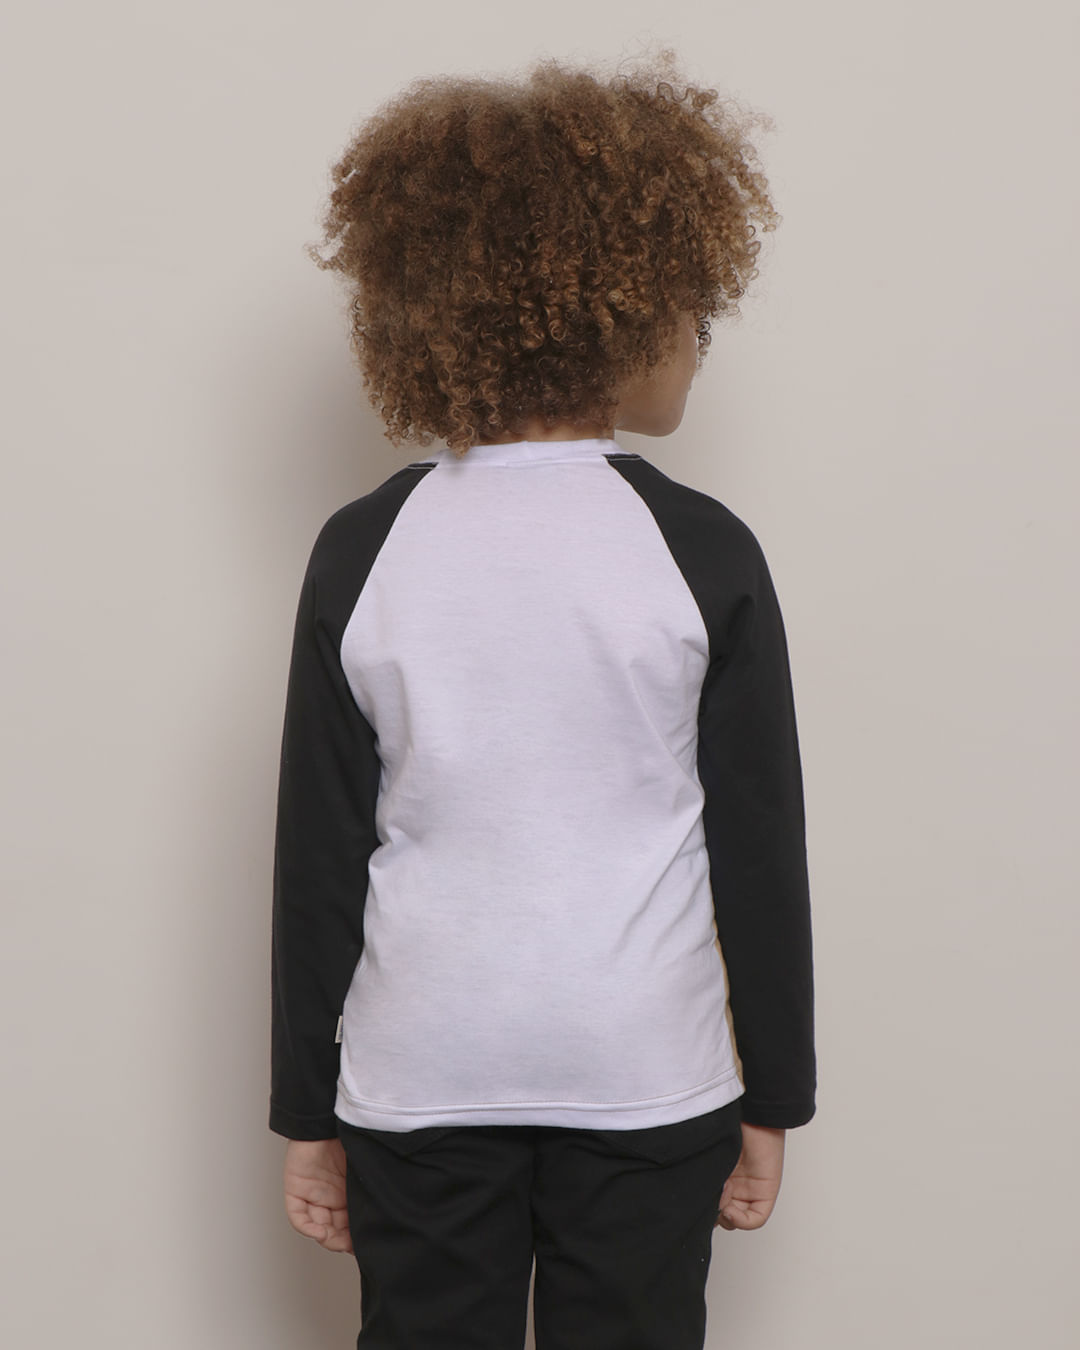 Camiseta Do r Brancoala Infantil e Juvenil Unissex mangas preta -  Modatop - Camiseta Infantil - Magazine Luiza